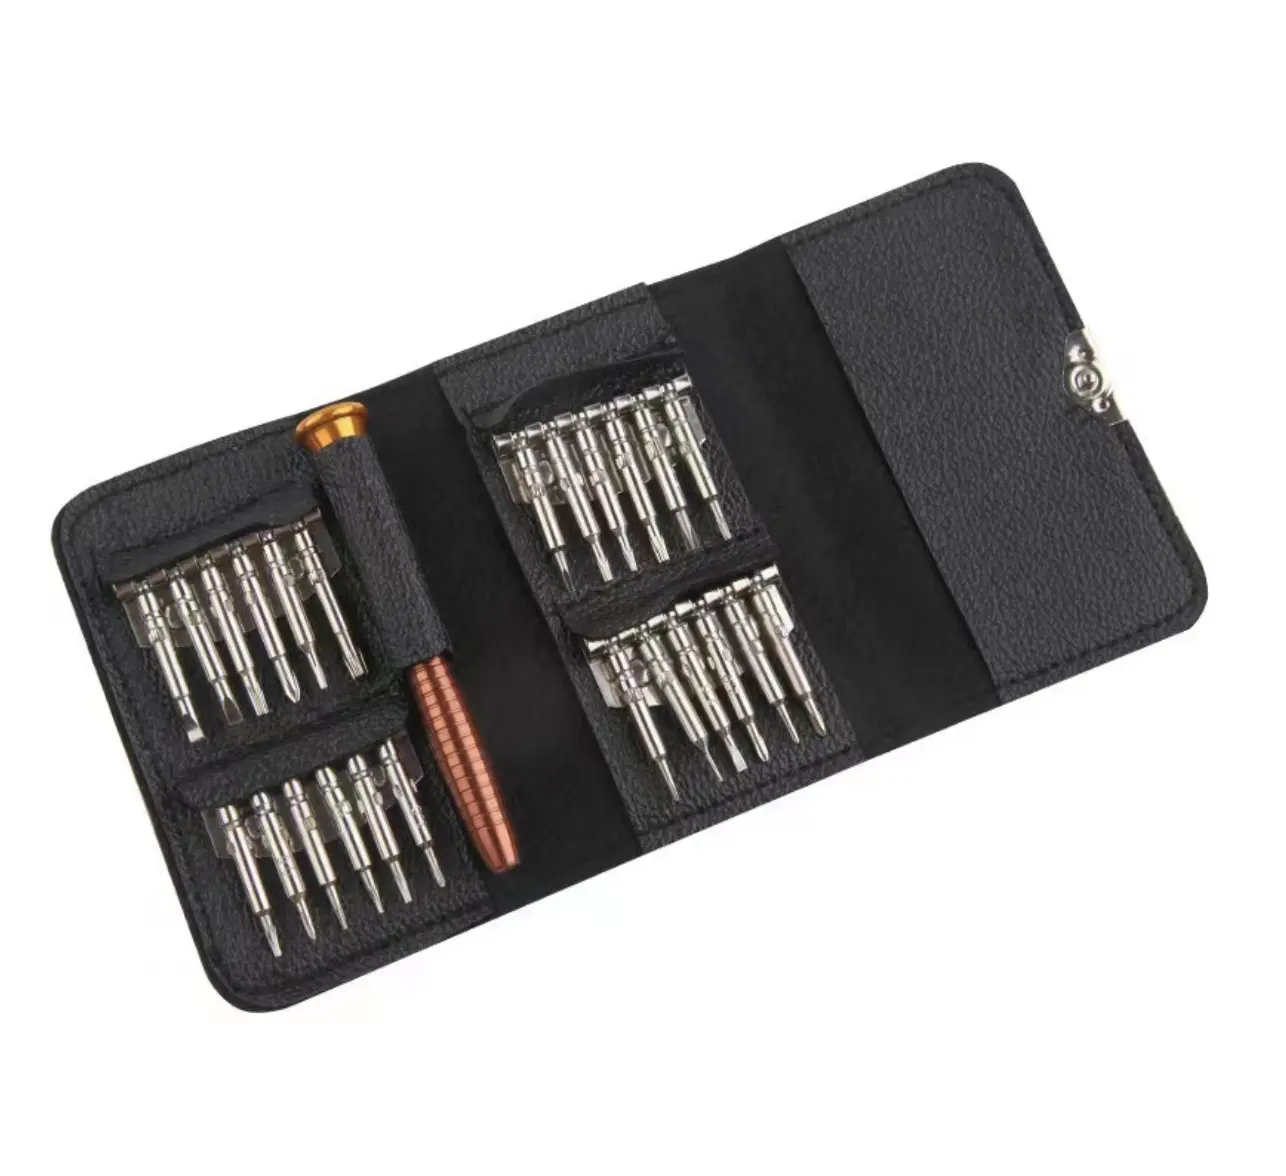 Set obeng kulit, 25 dalam 1 jenis tas kulit hitam asisten perbaikan ponsel beberapa saku dengan telepon Magnet listrik Ratchet